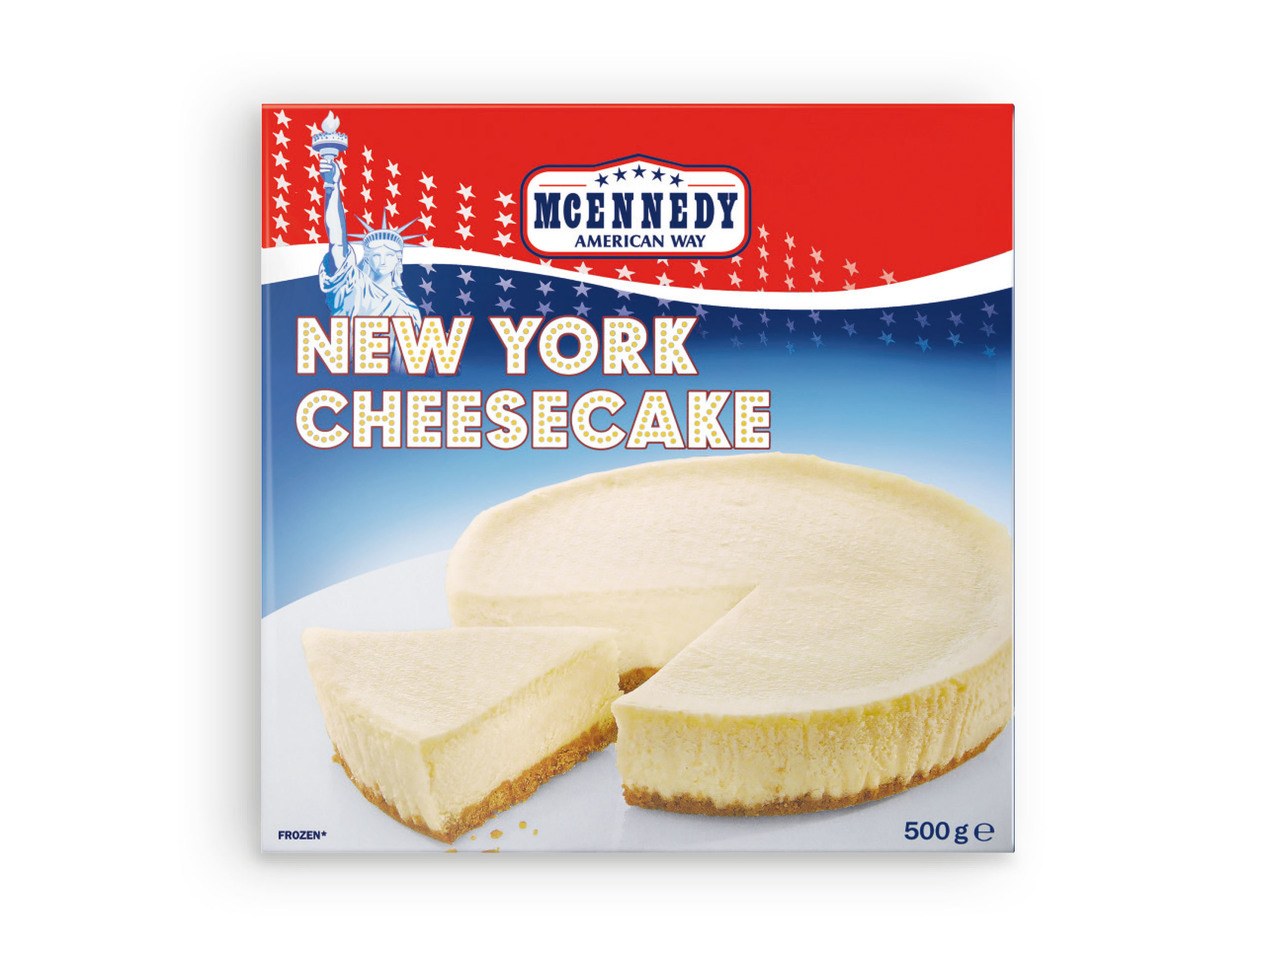 MCENNEDY(R) Cheesecake New York